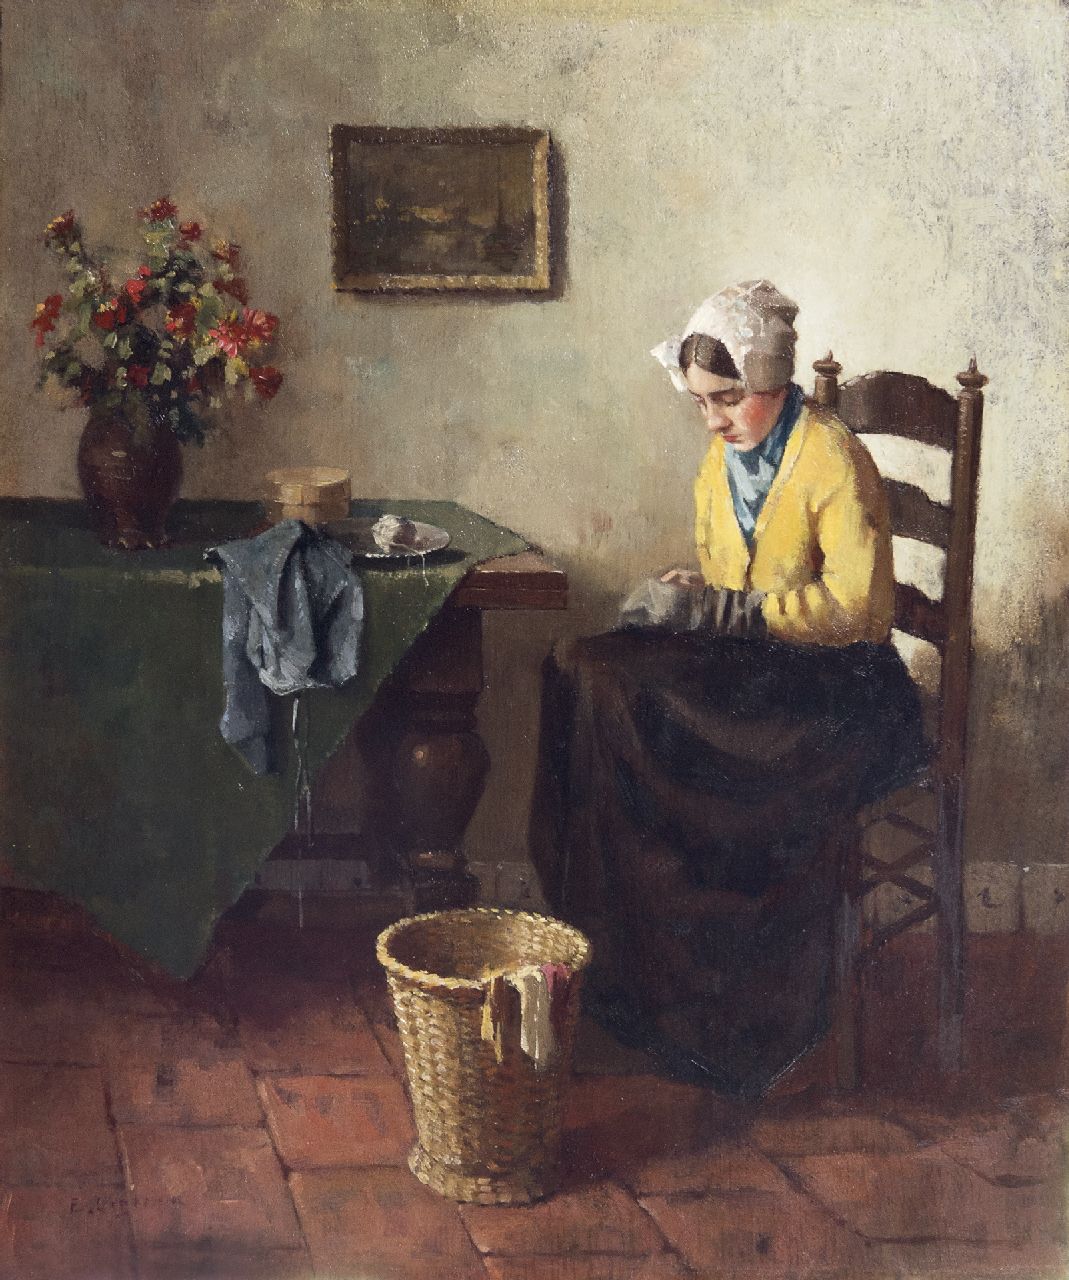 Ligtelijn E.J.  | Evert Jan Ligtelijn, Quietly mending, oil on panel 35.0 x 29.3 cm, signed l.l.